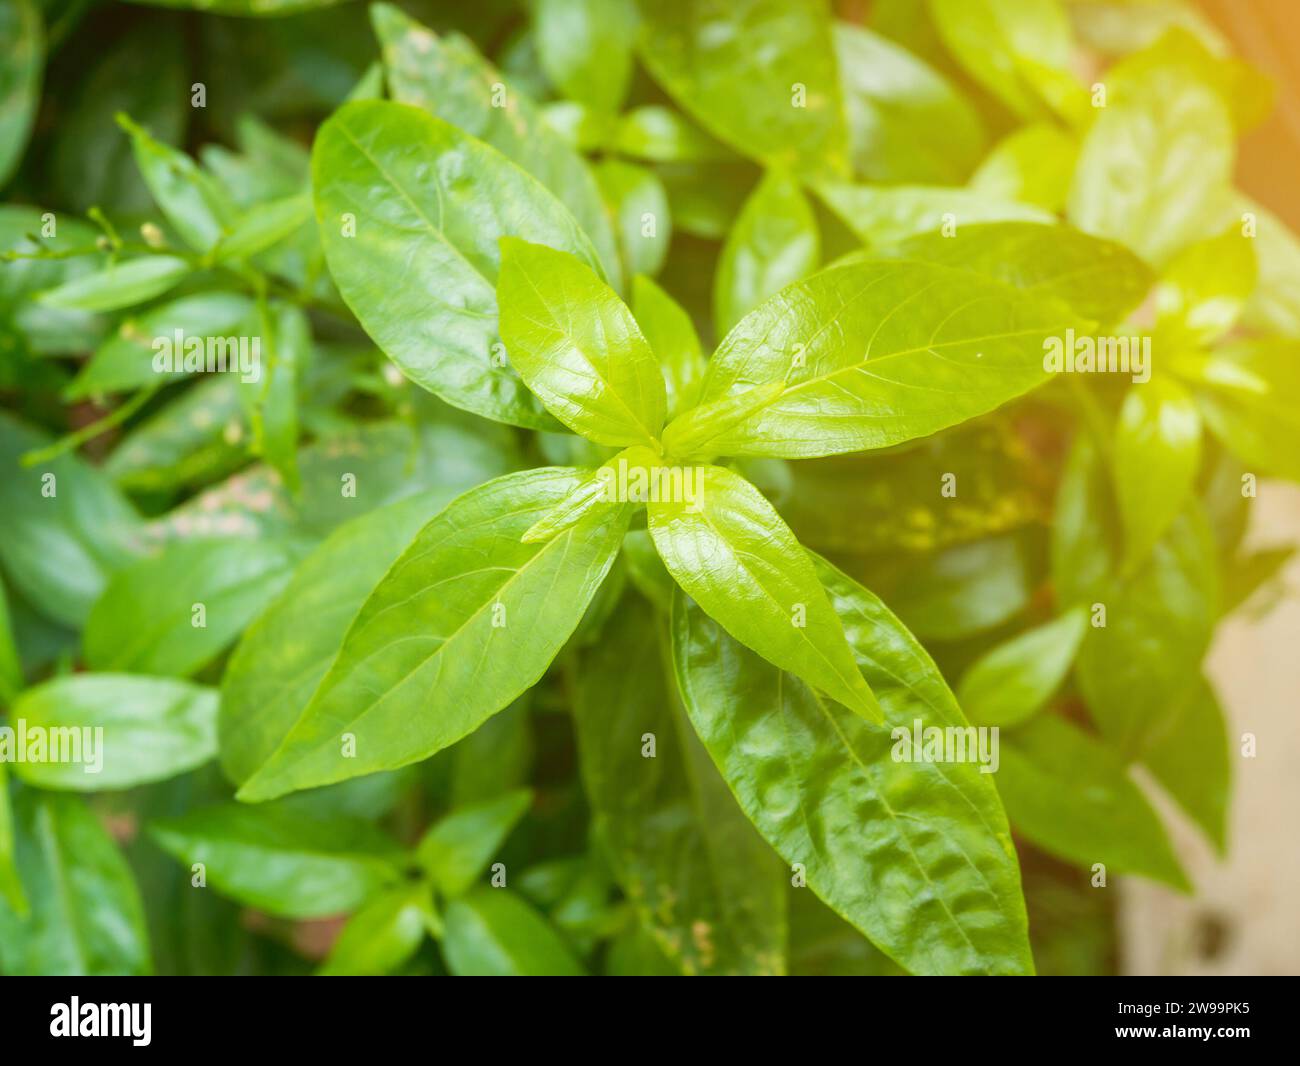 fresh herbal plant leaves Andrographis paniculata ( Burm.f. ) Wall ex Nees Stock Photo